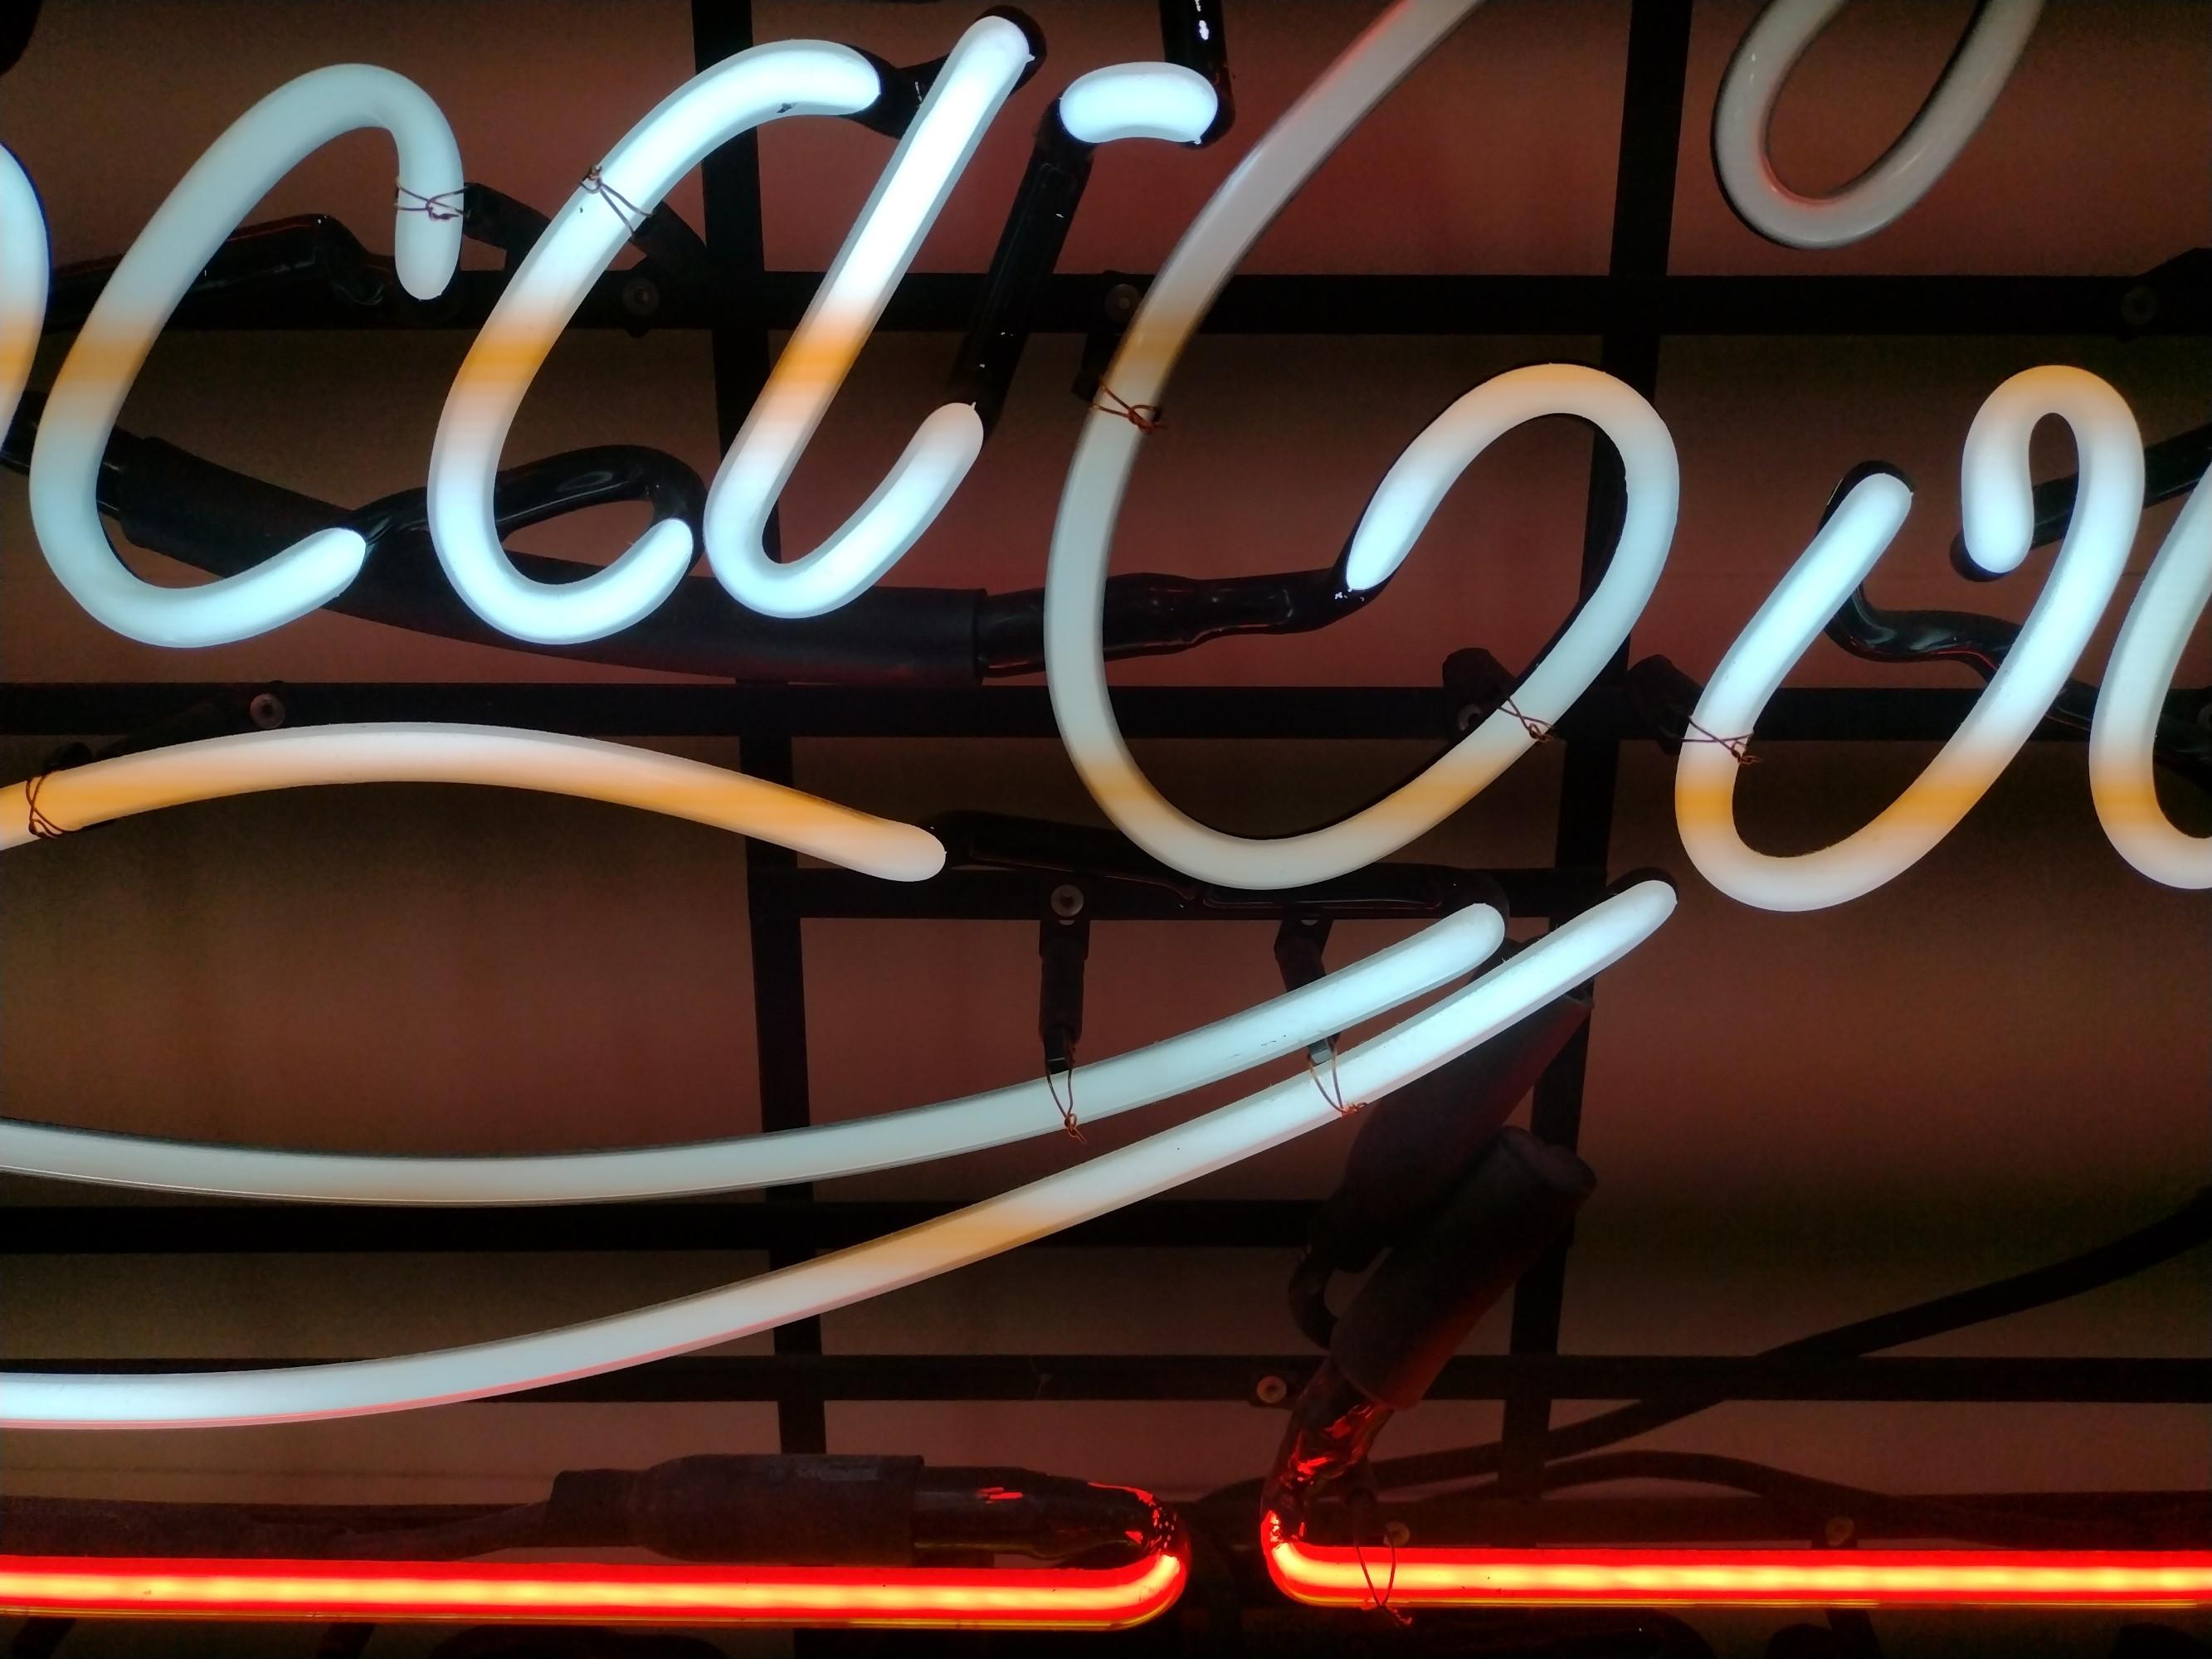 Neon Coca-Cola Advertising Sign